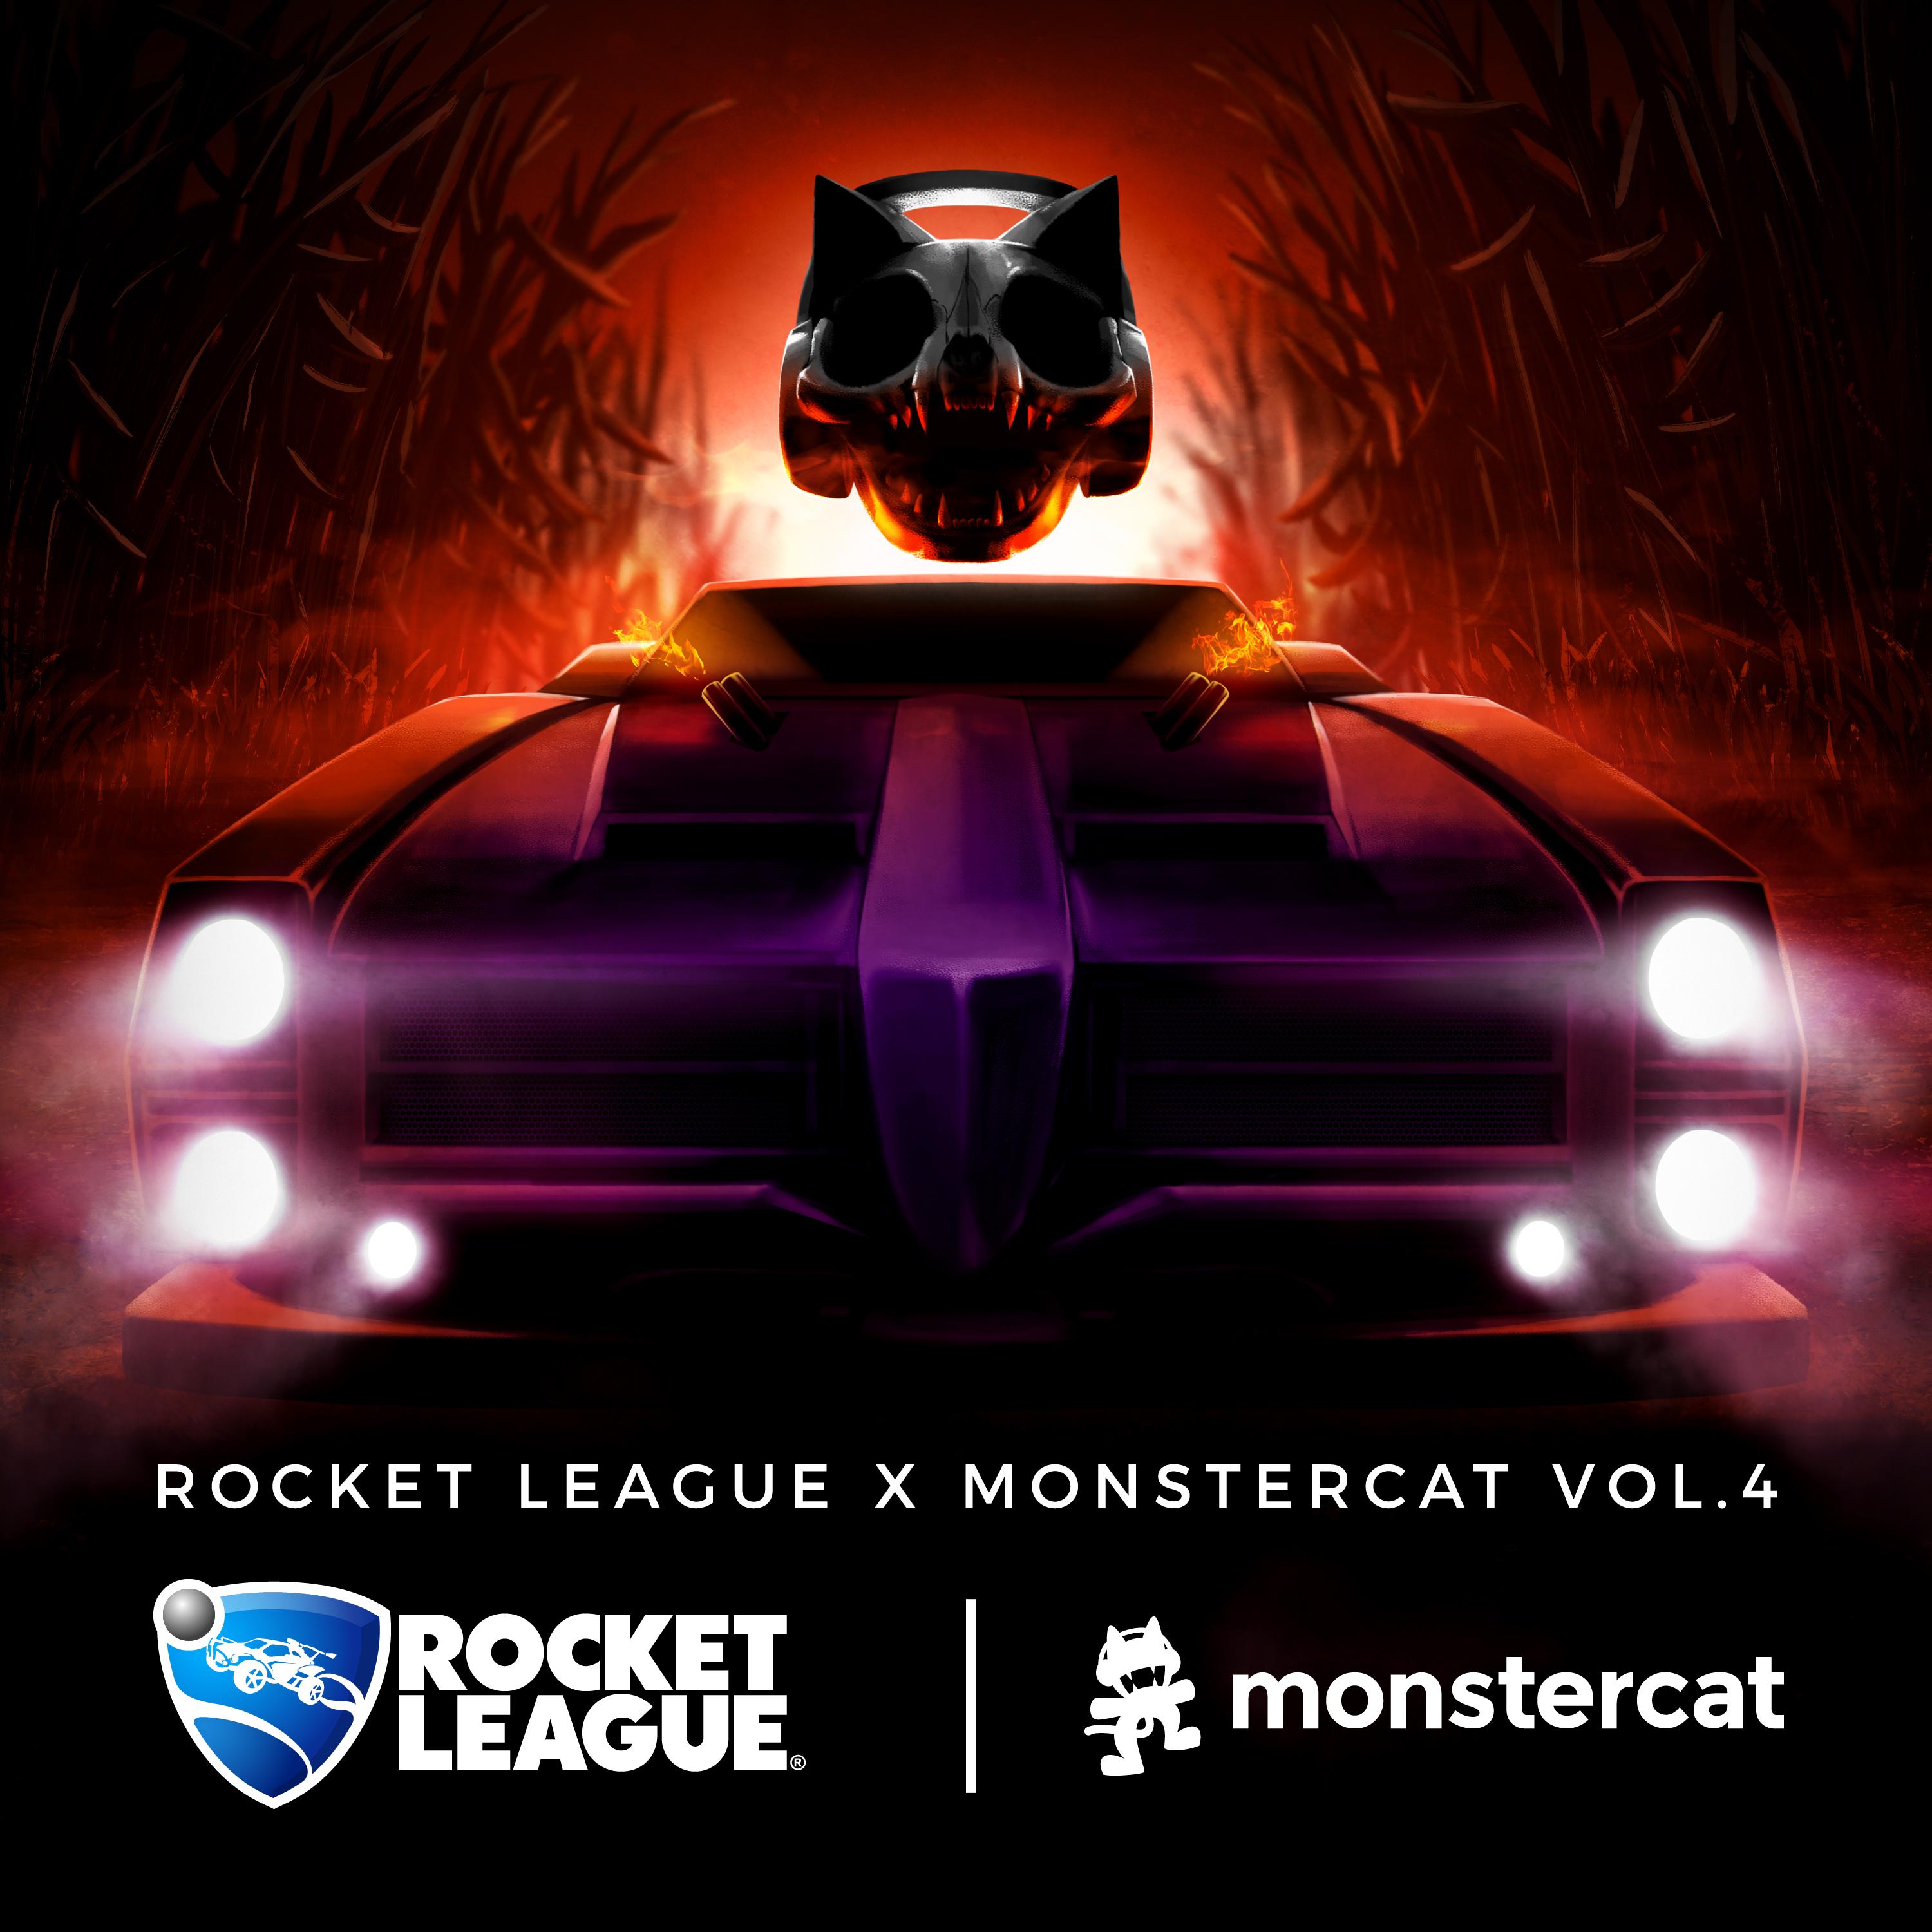 Rocket League x Monstercat Vol. 4